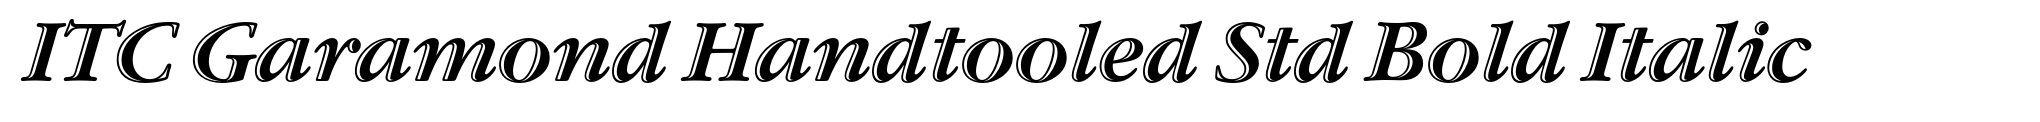 ITC Garamond Handtooled Std Bold Italic image